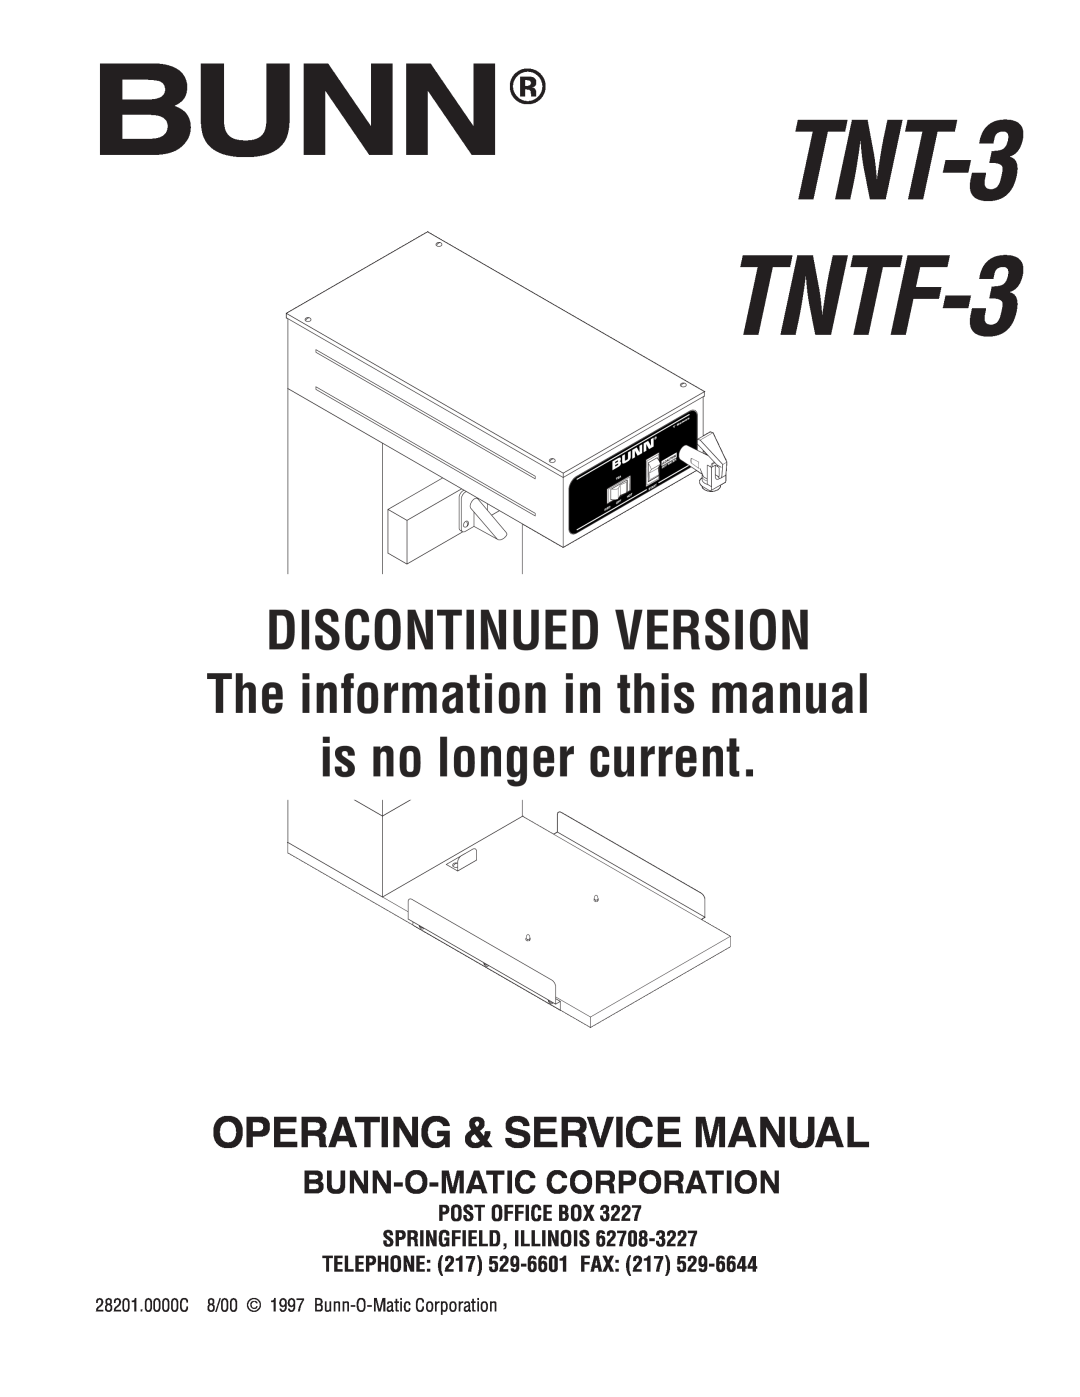 Bunn service manual POST OFFICE BOX SPRINGFIELD, ILLINOIS TELEPHONE 217 529-6601 FAX, BUNN TNT-3 TNTF-3 